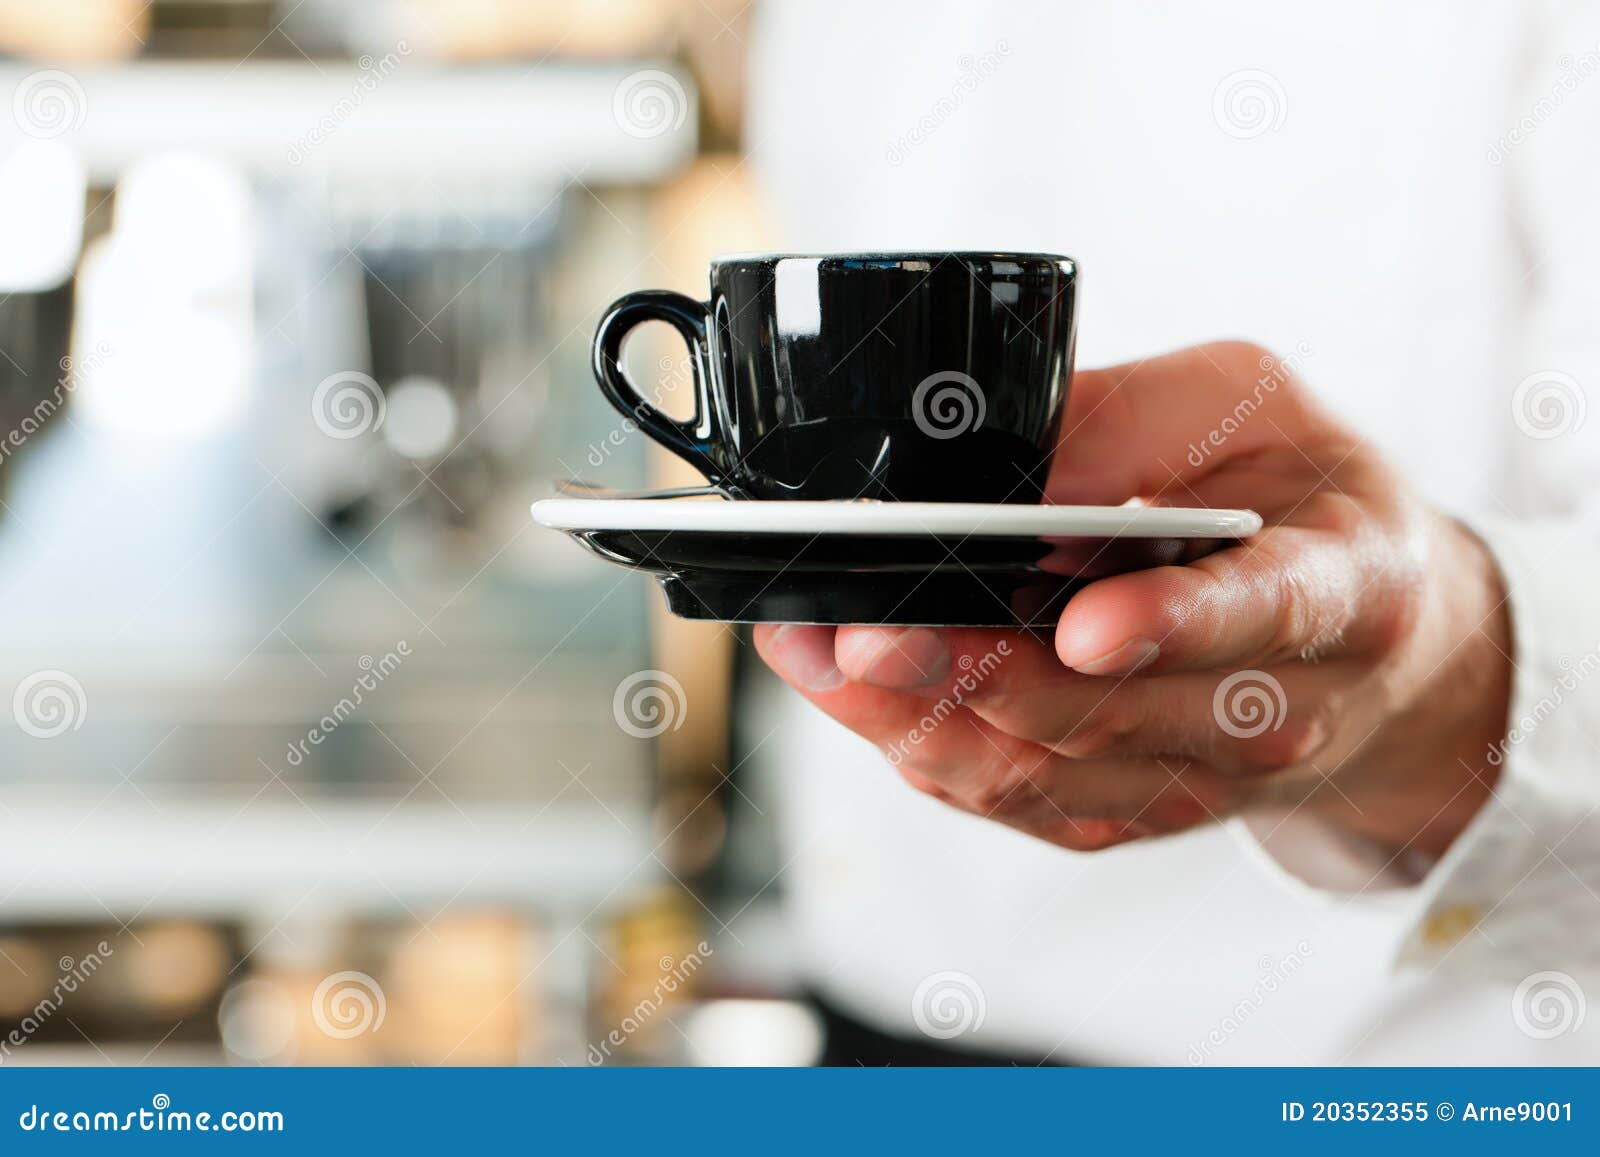 coffeeshop - barista presents coffee or cappuccino